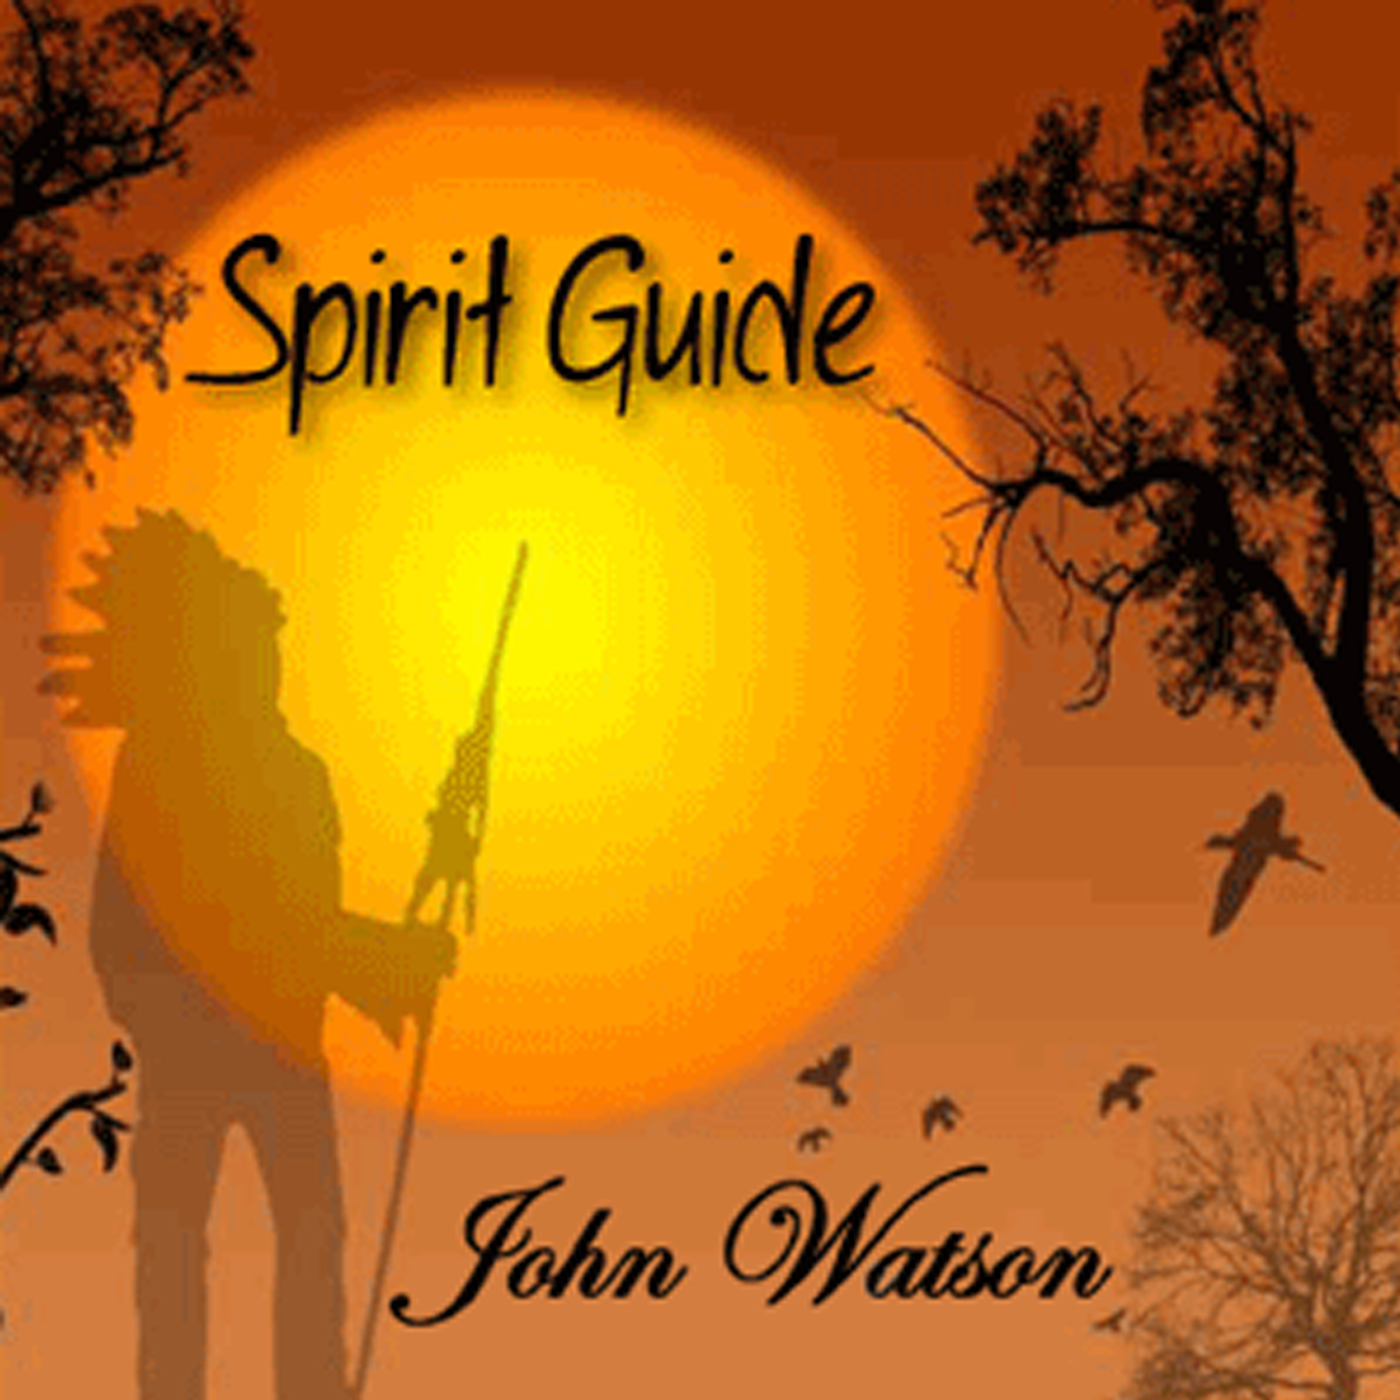 Spirit Guide John Watson Album Cover